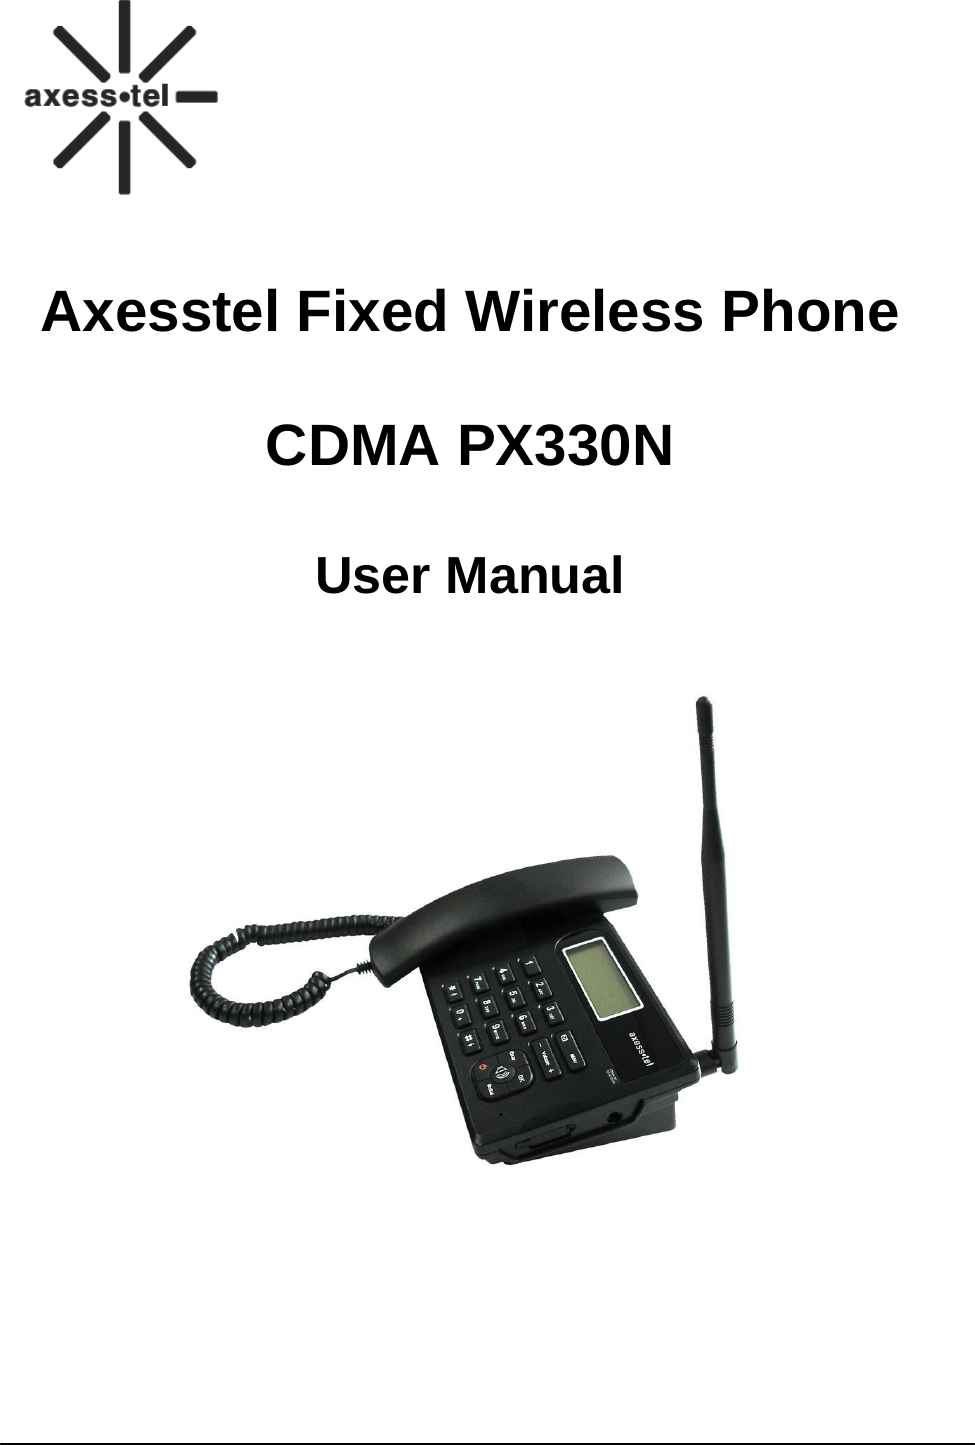      Axesstel Fixed Wireless Phone  CDMA PX330N   User Manual              